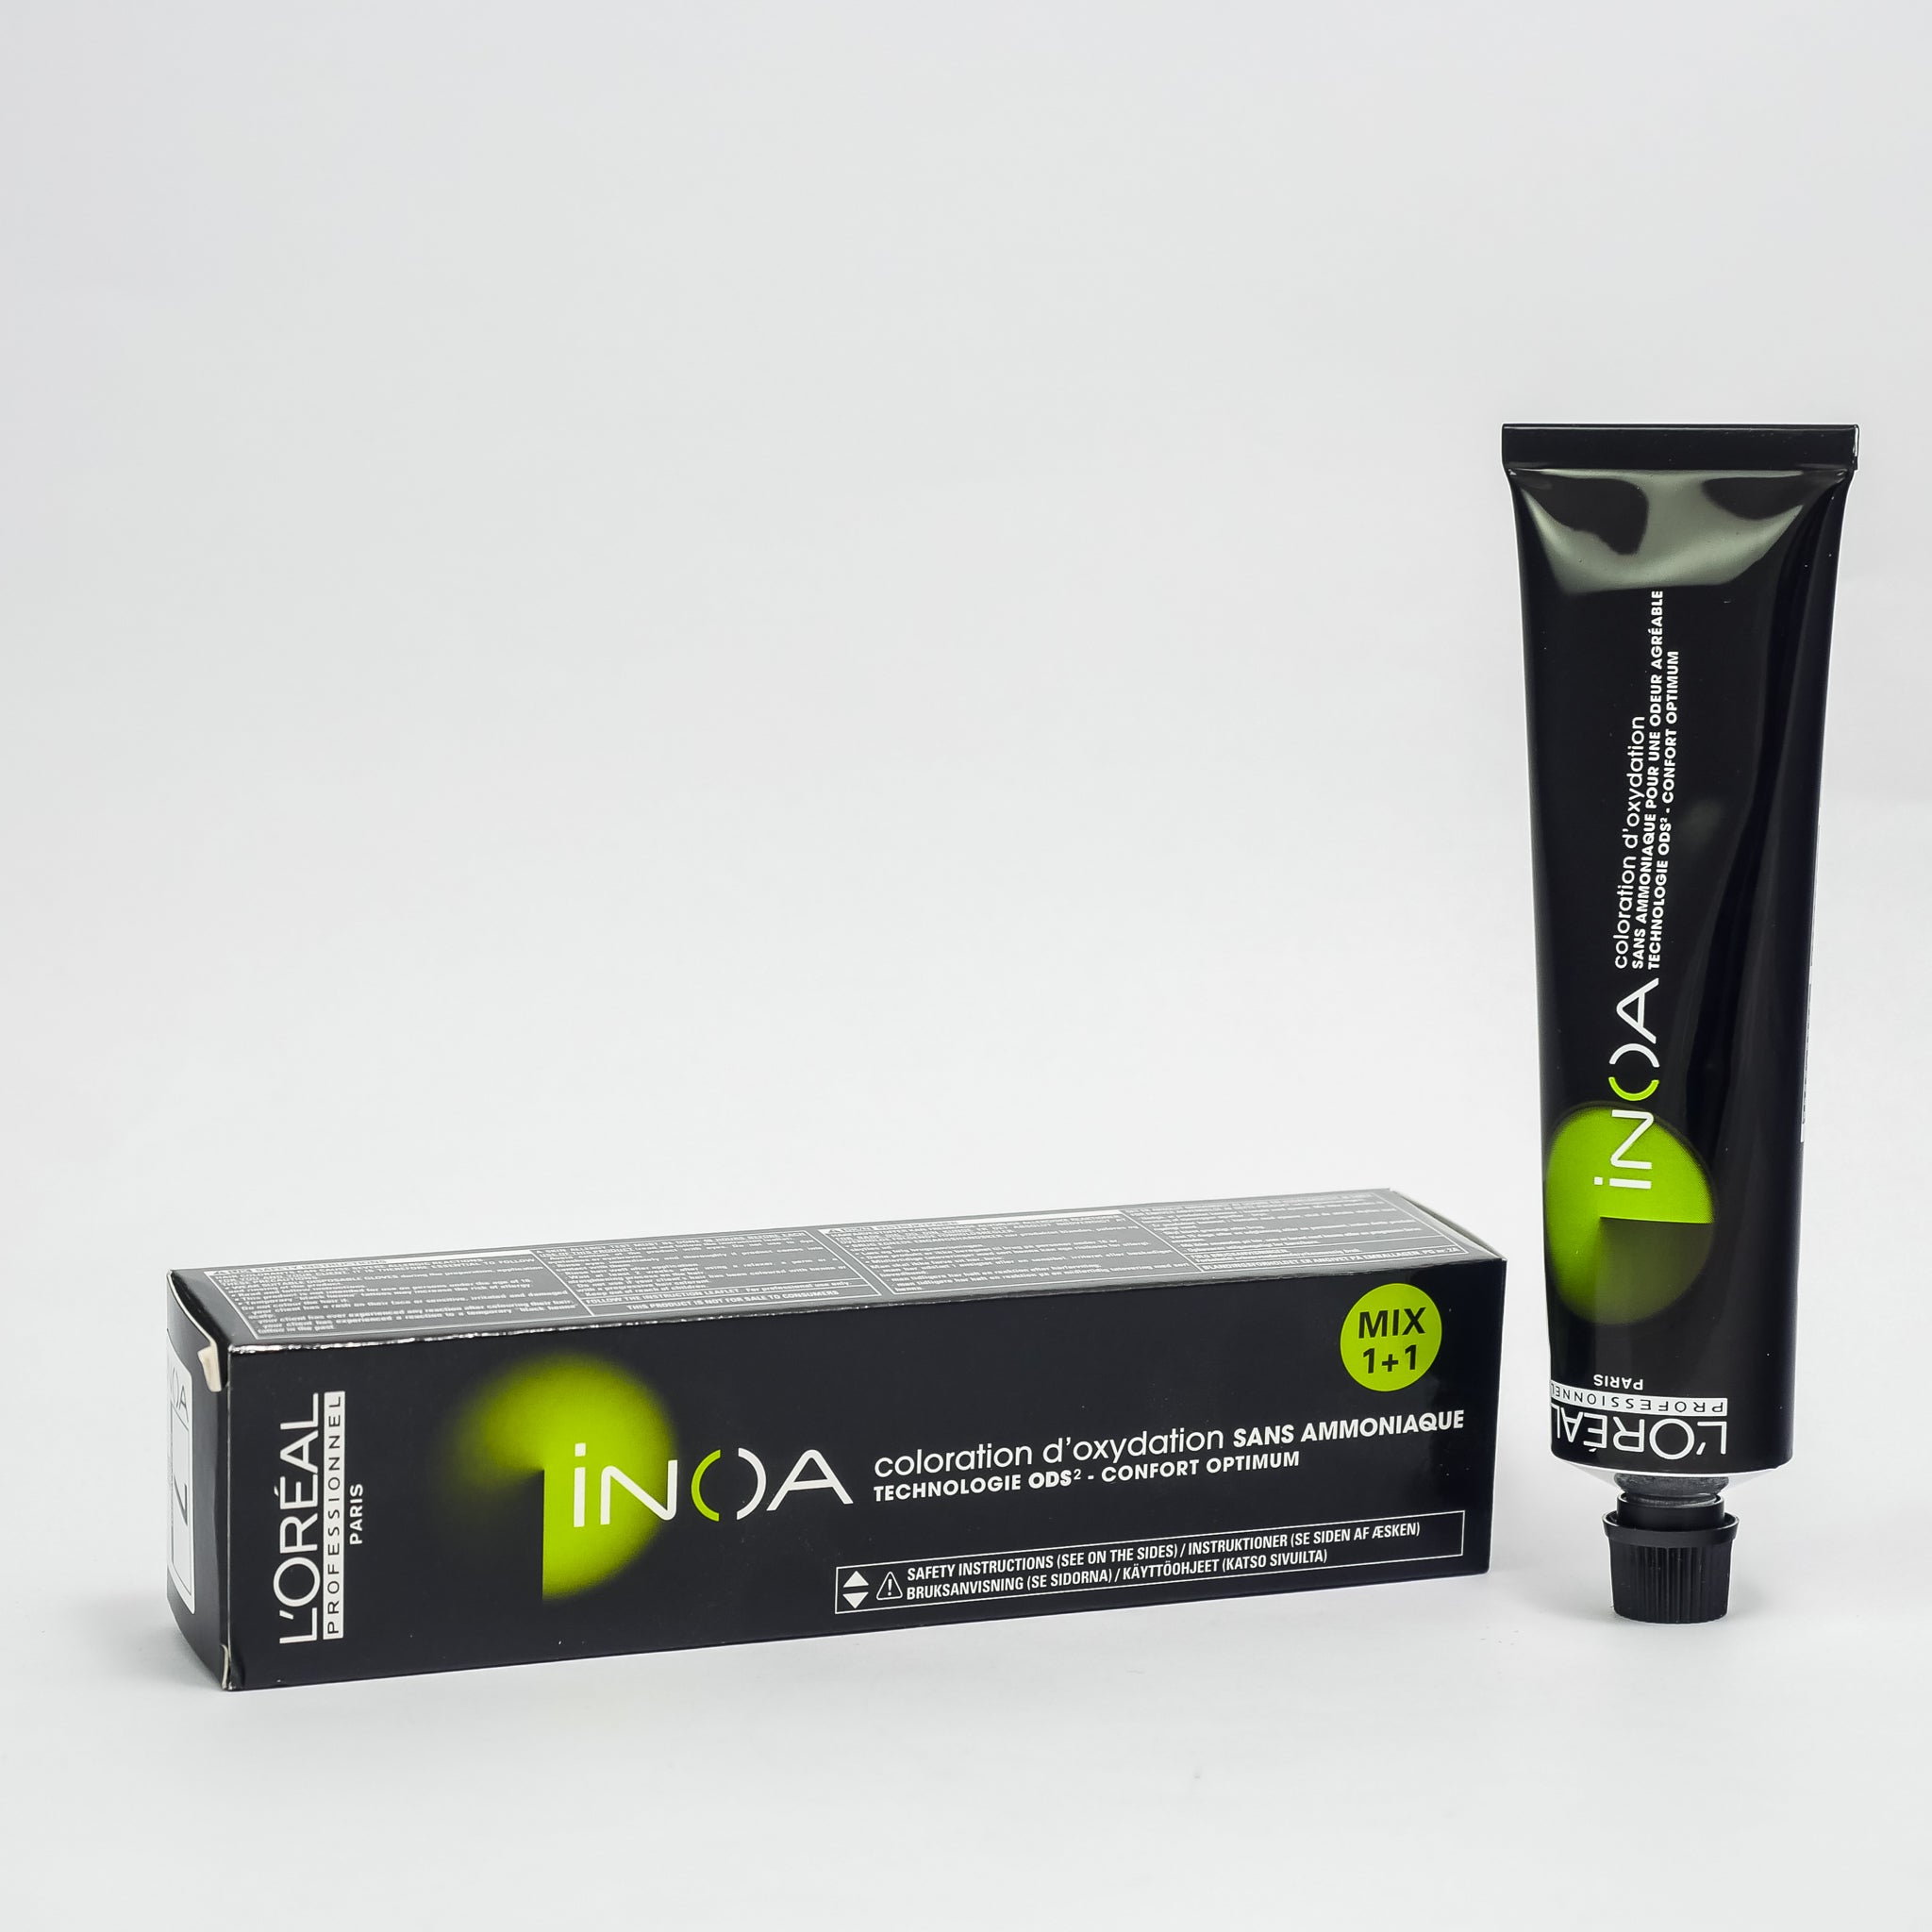 L'Oreal Paris Professional Inoa Hair Color with Inoa Devloper – Sondaryam